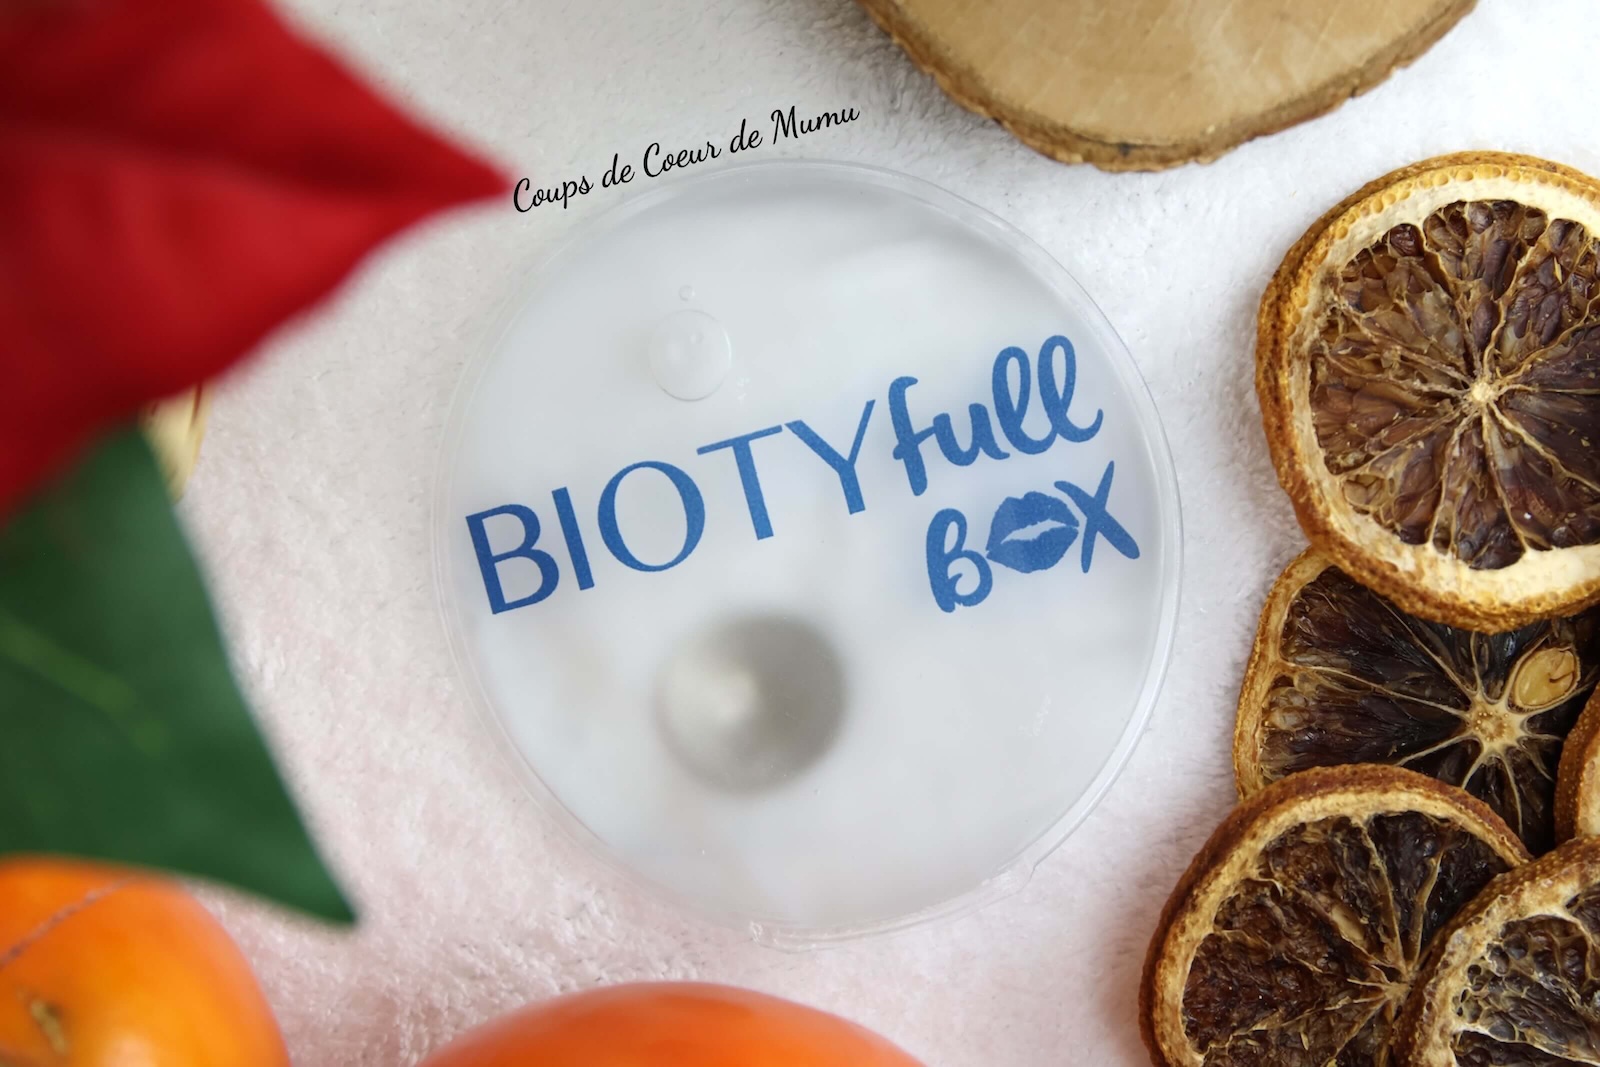 Bouillotte Mains Biotyfull Box